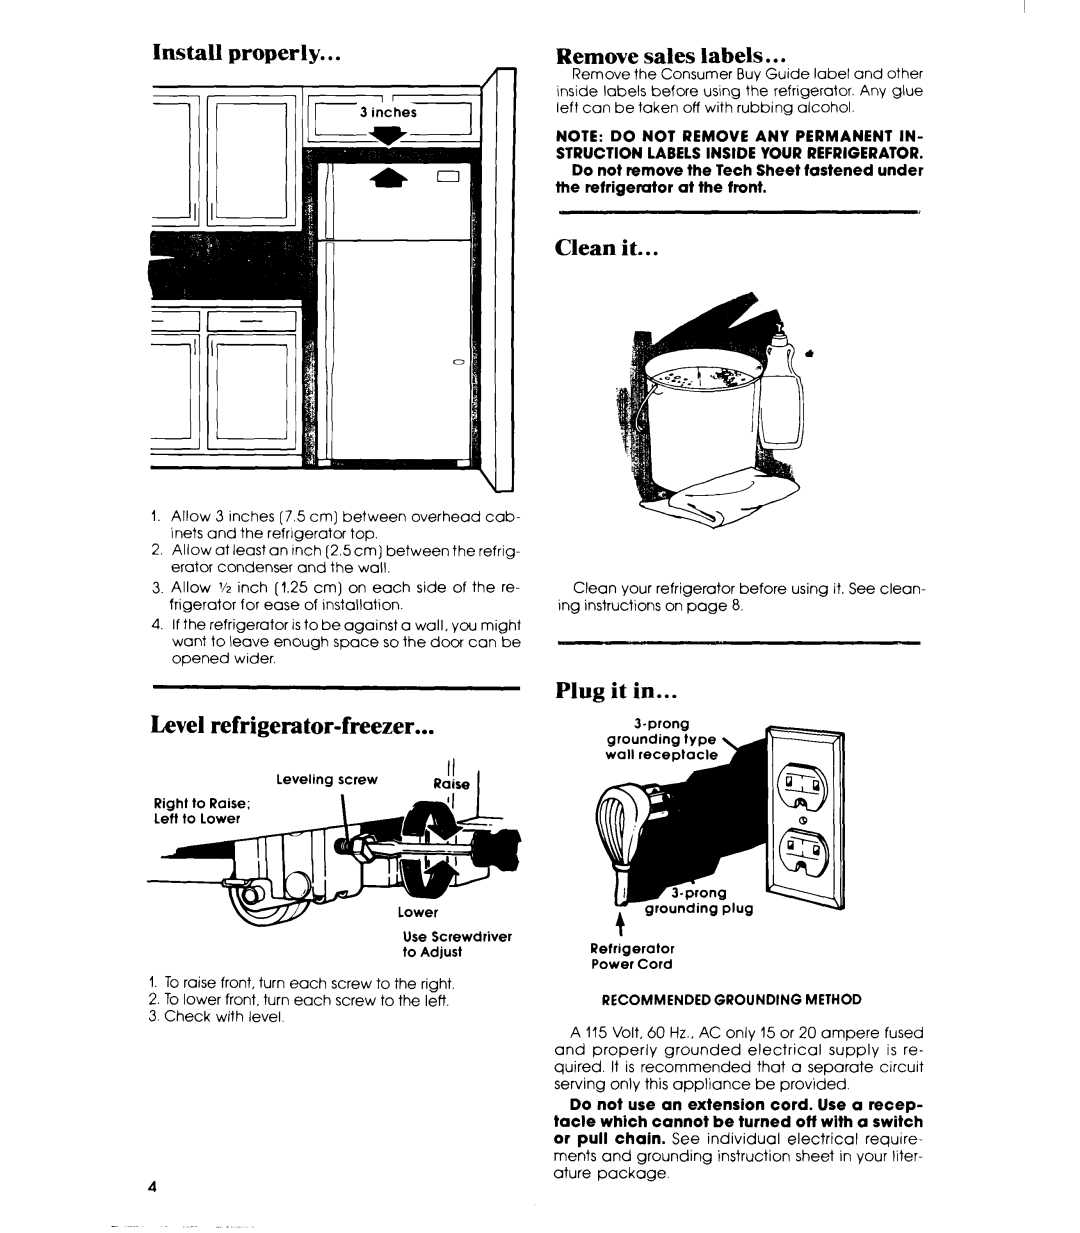 Whirlpool ETl8TK manual Level refrigerator-freezer, Install properly, Remove sales labels, Clean it, Plug it in 